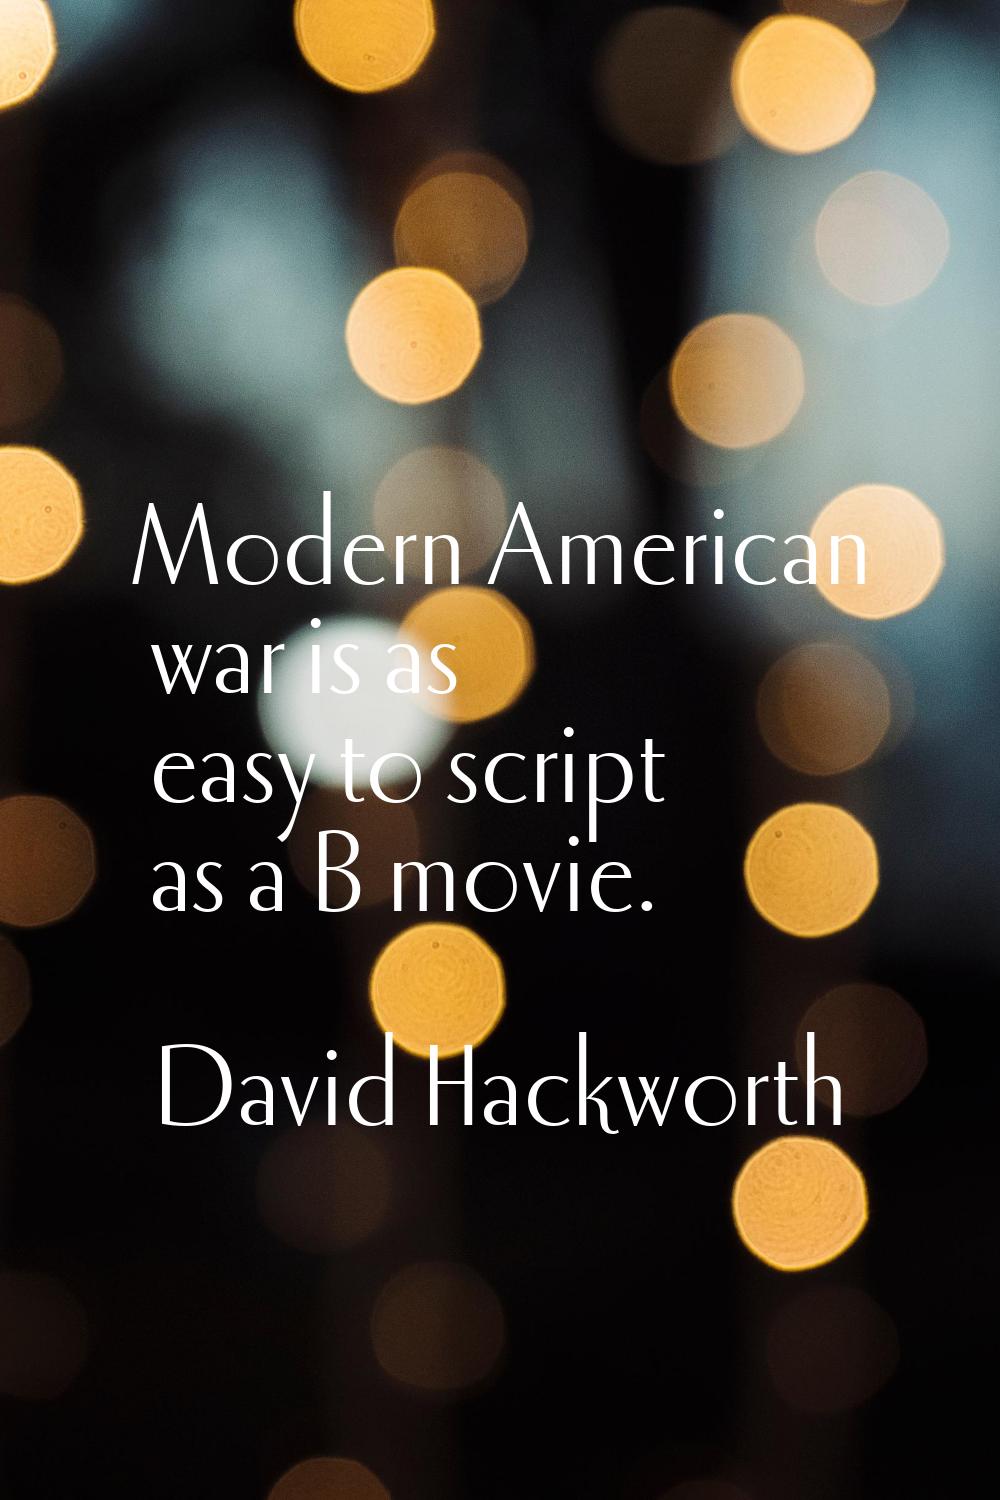 Modern American war is as easy to script as a B movie.